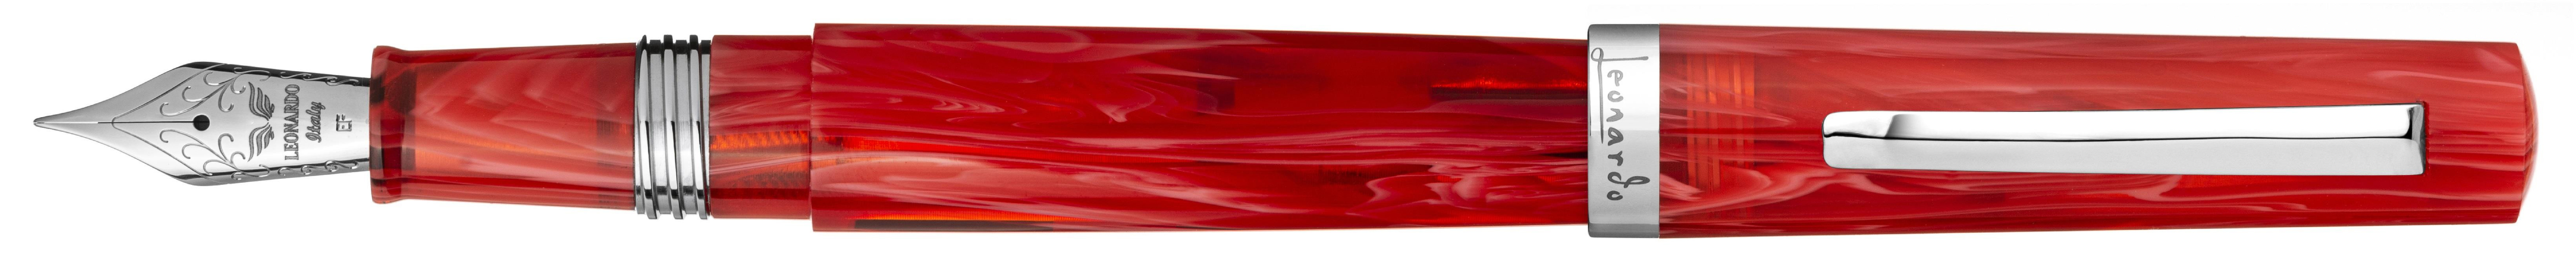 Leonardo Officina Italiana Messenger collection Red Limited edition of 366  Fountain pen